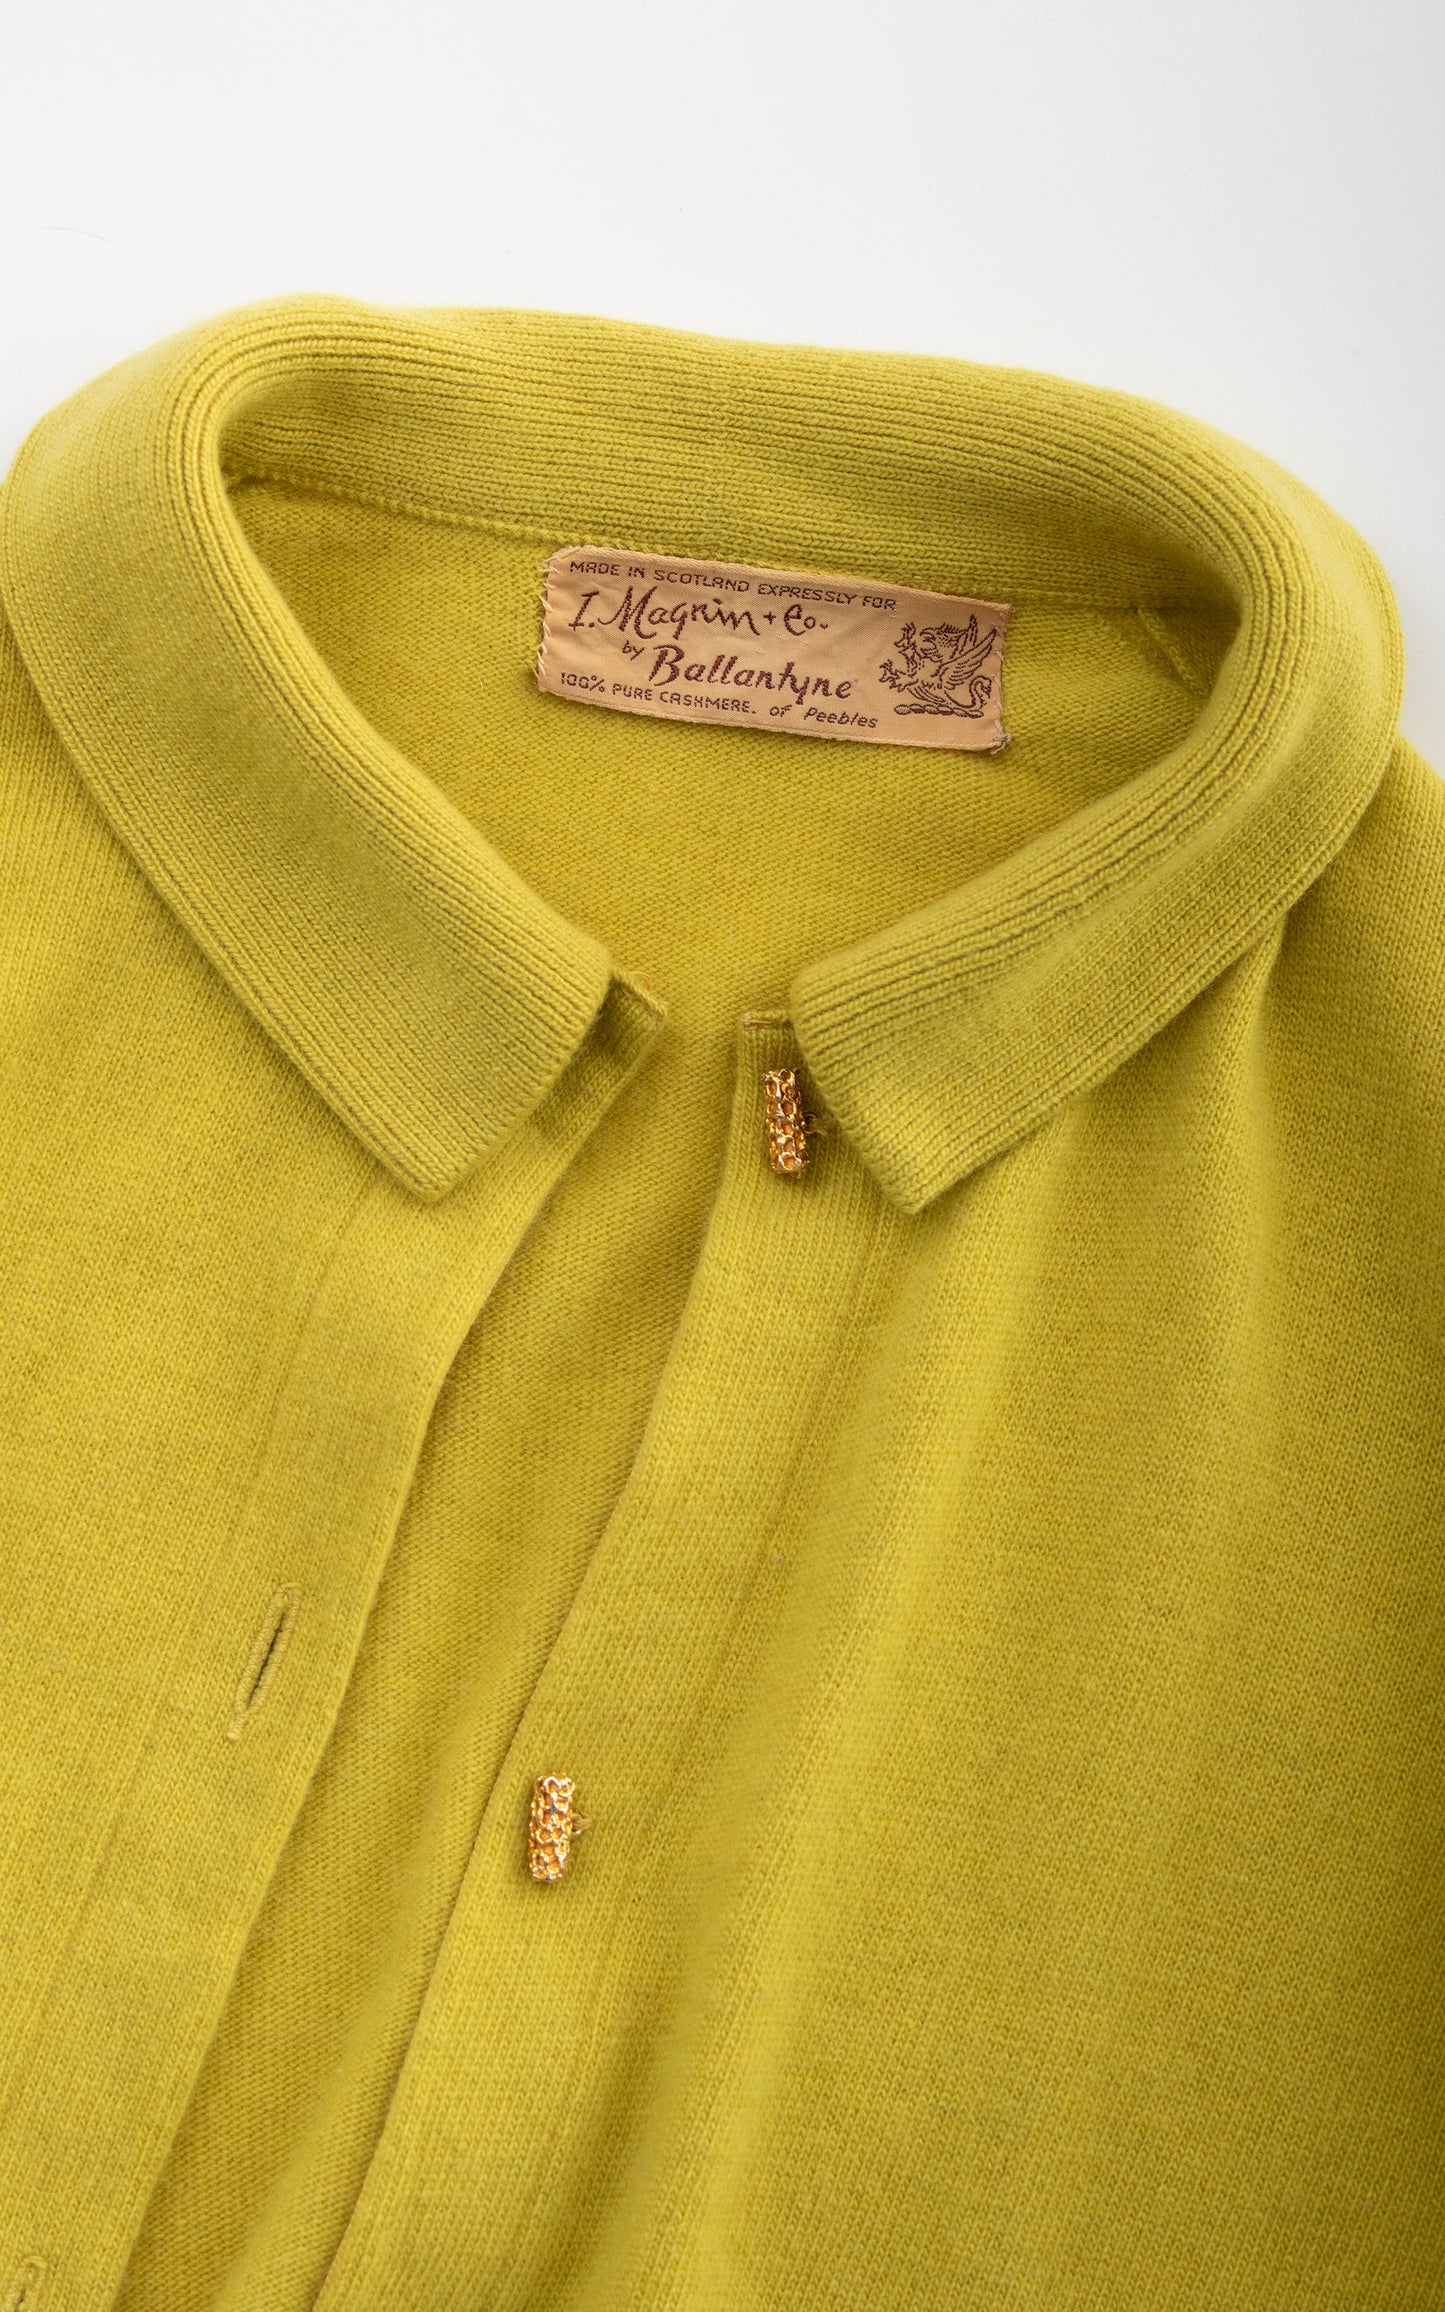 1950s BALLANTYNE Knit Cashmere Cardigan | medium/large